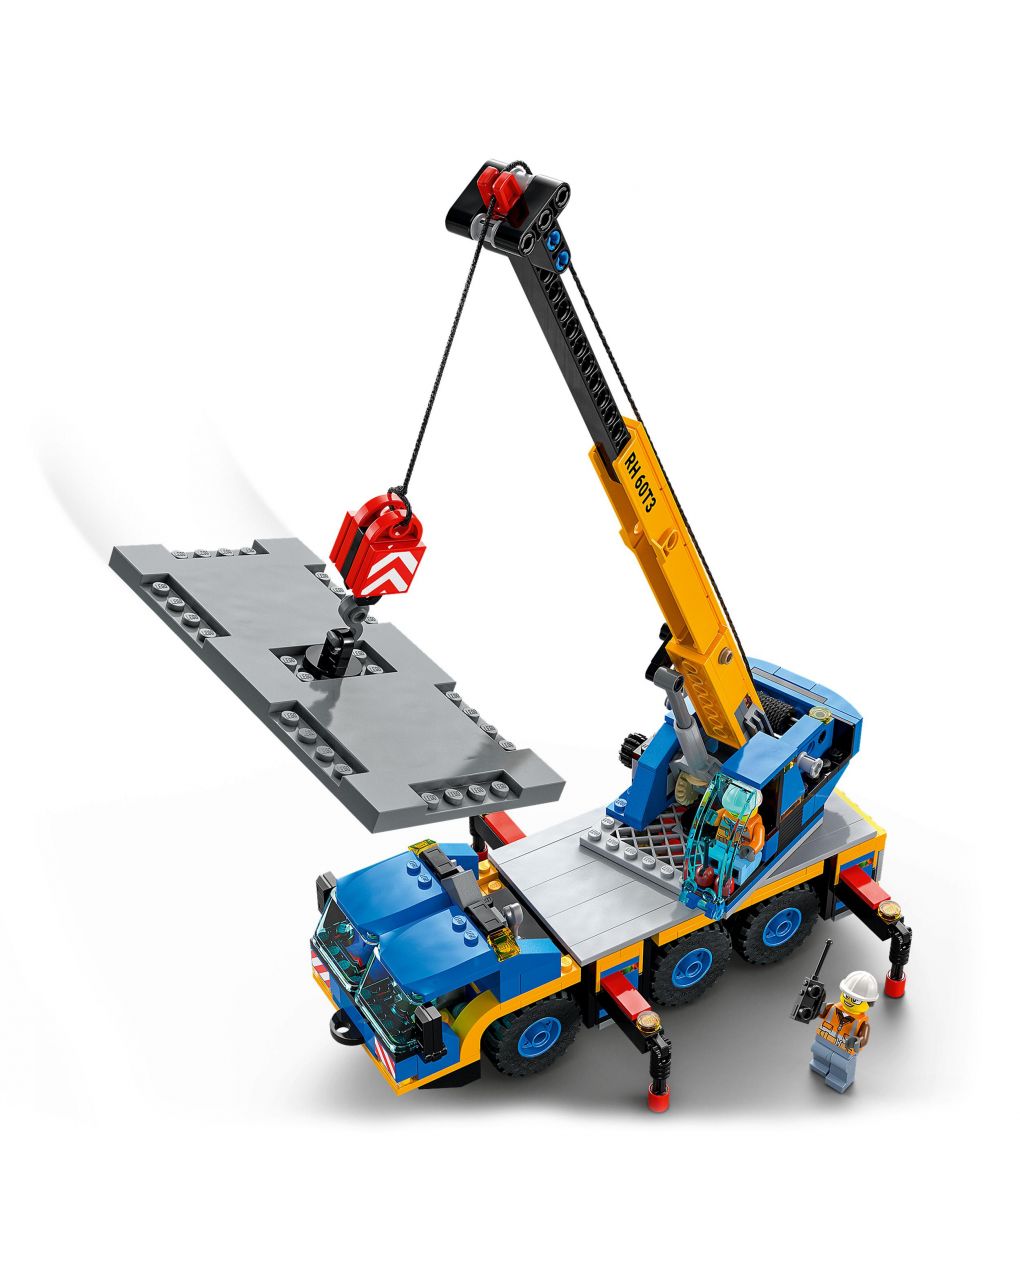 Lego city great vehicles - gru mobile - 60324 - LEGO